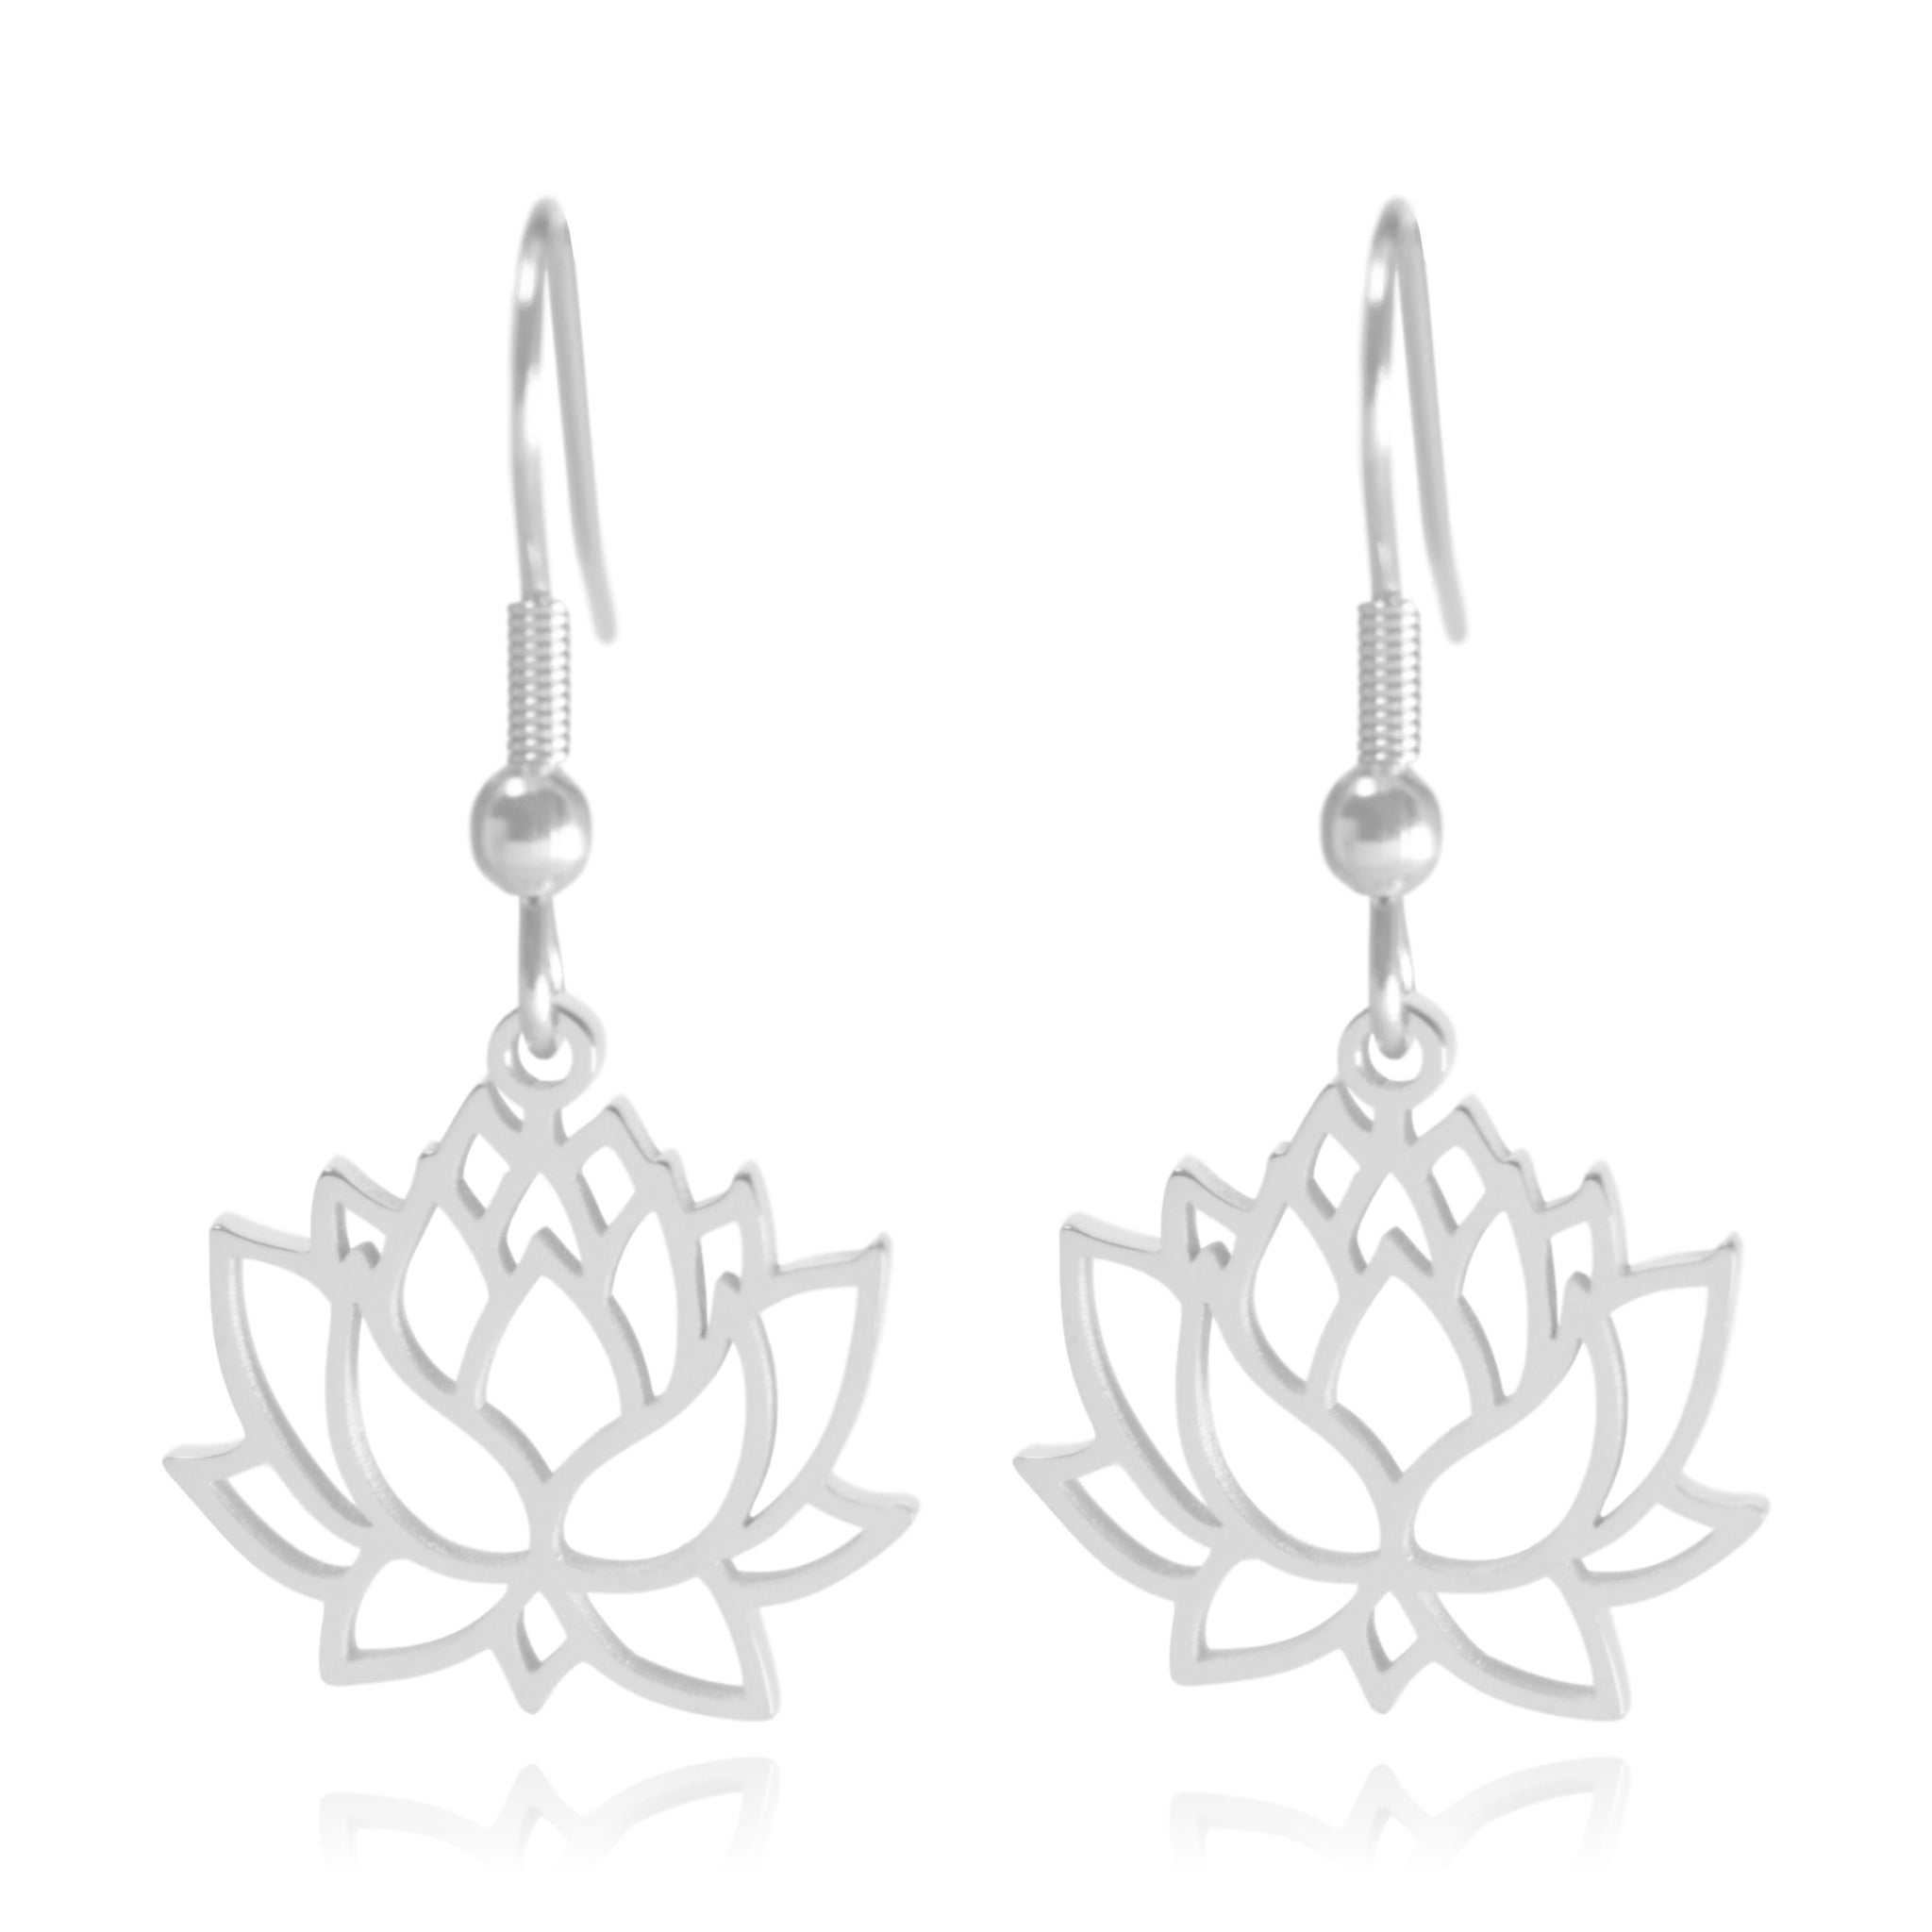 Silver Lotus Flower Stainless Steel Dangle Earrings